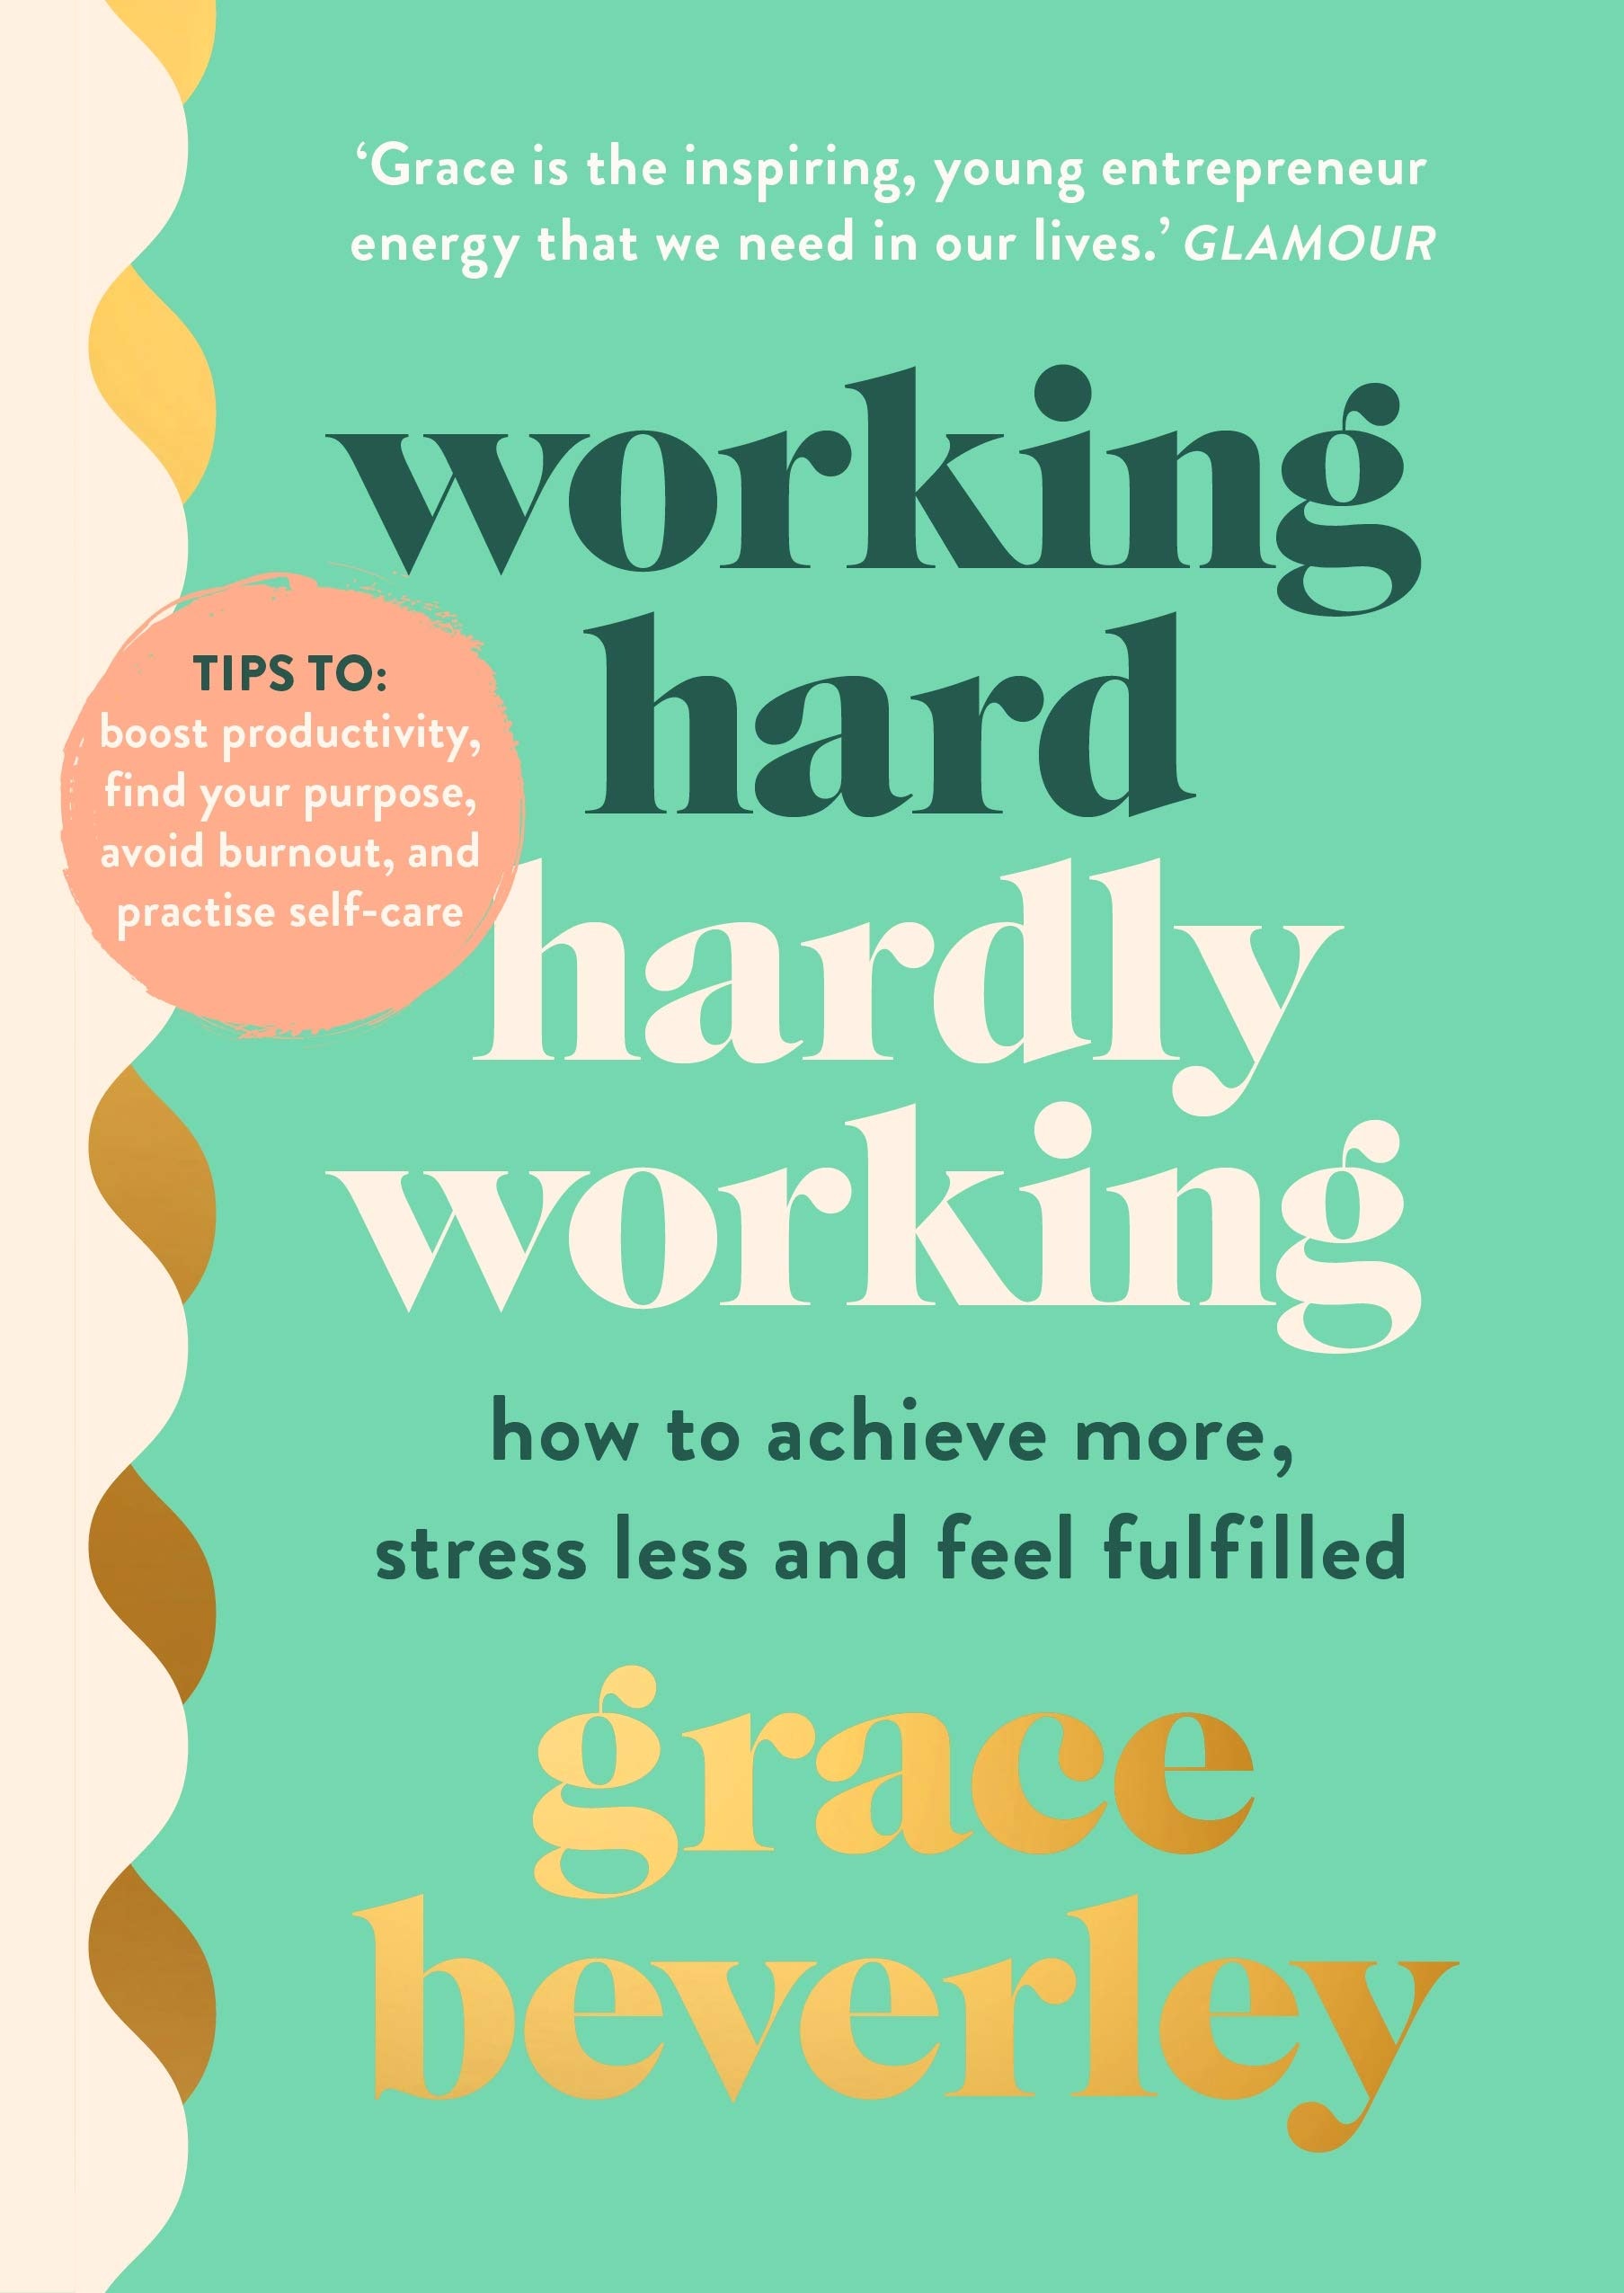 Kako biti produktivan i održati zdrav razum, prema Grace Beverley